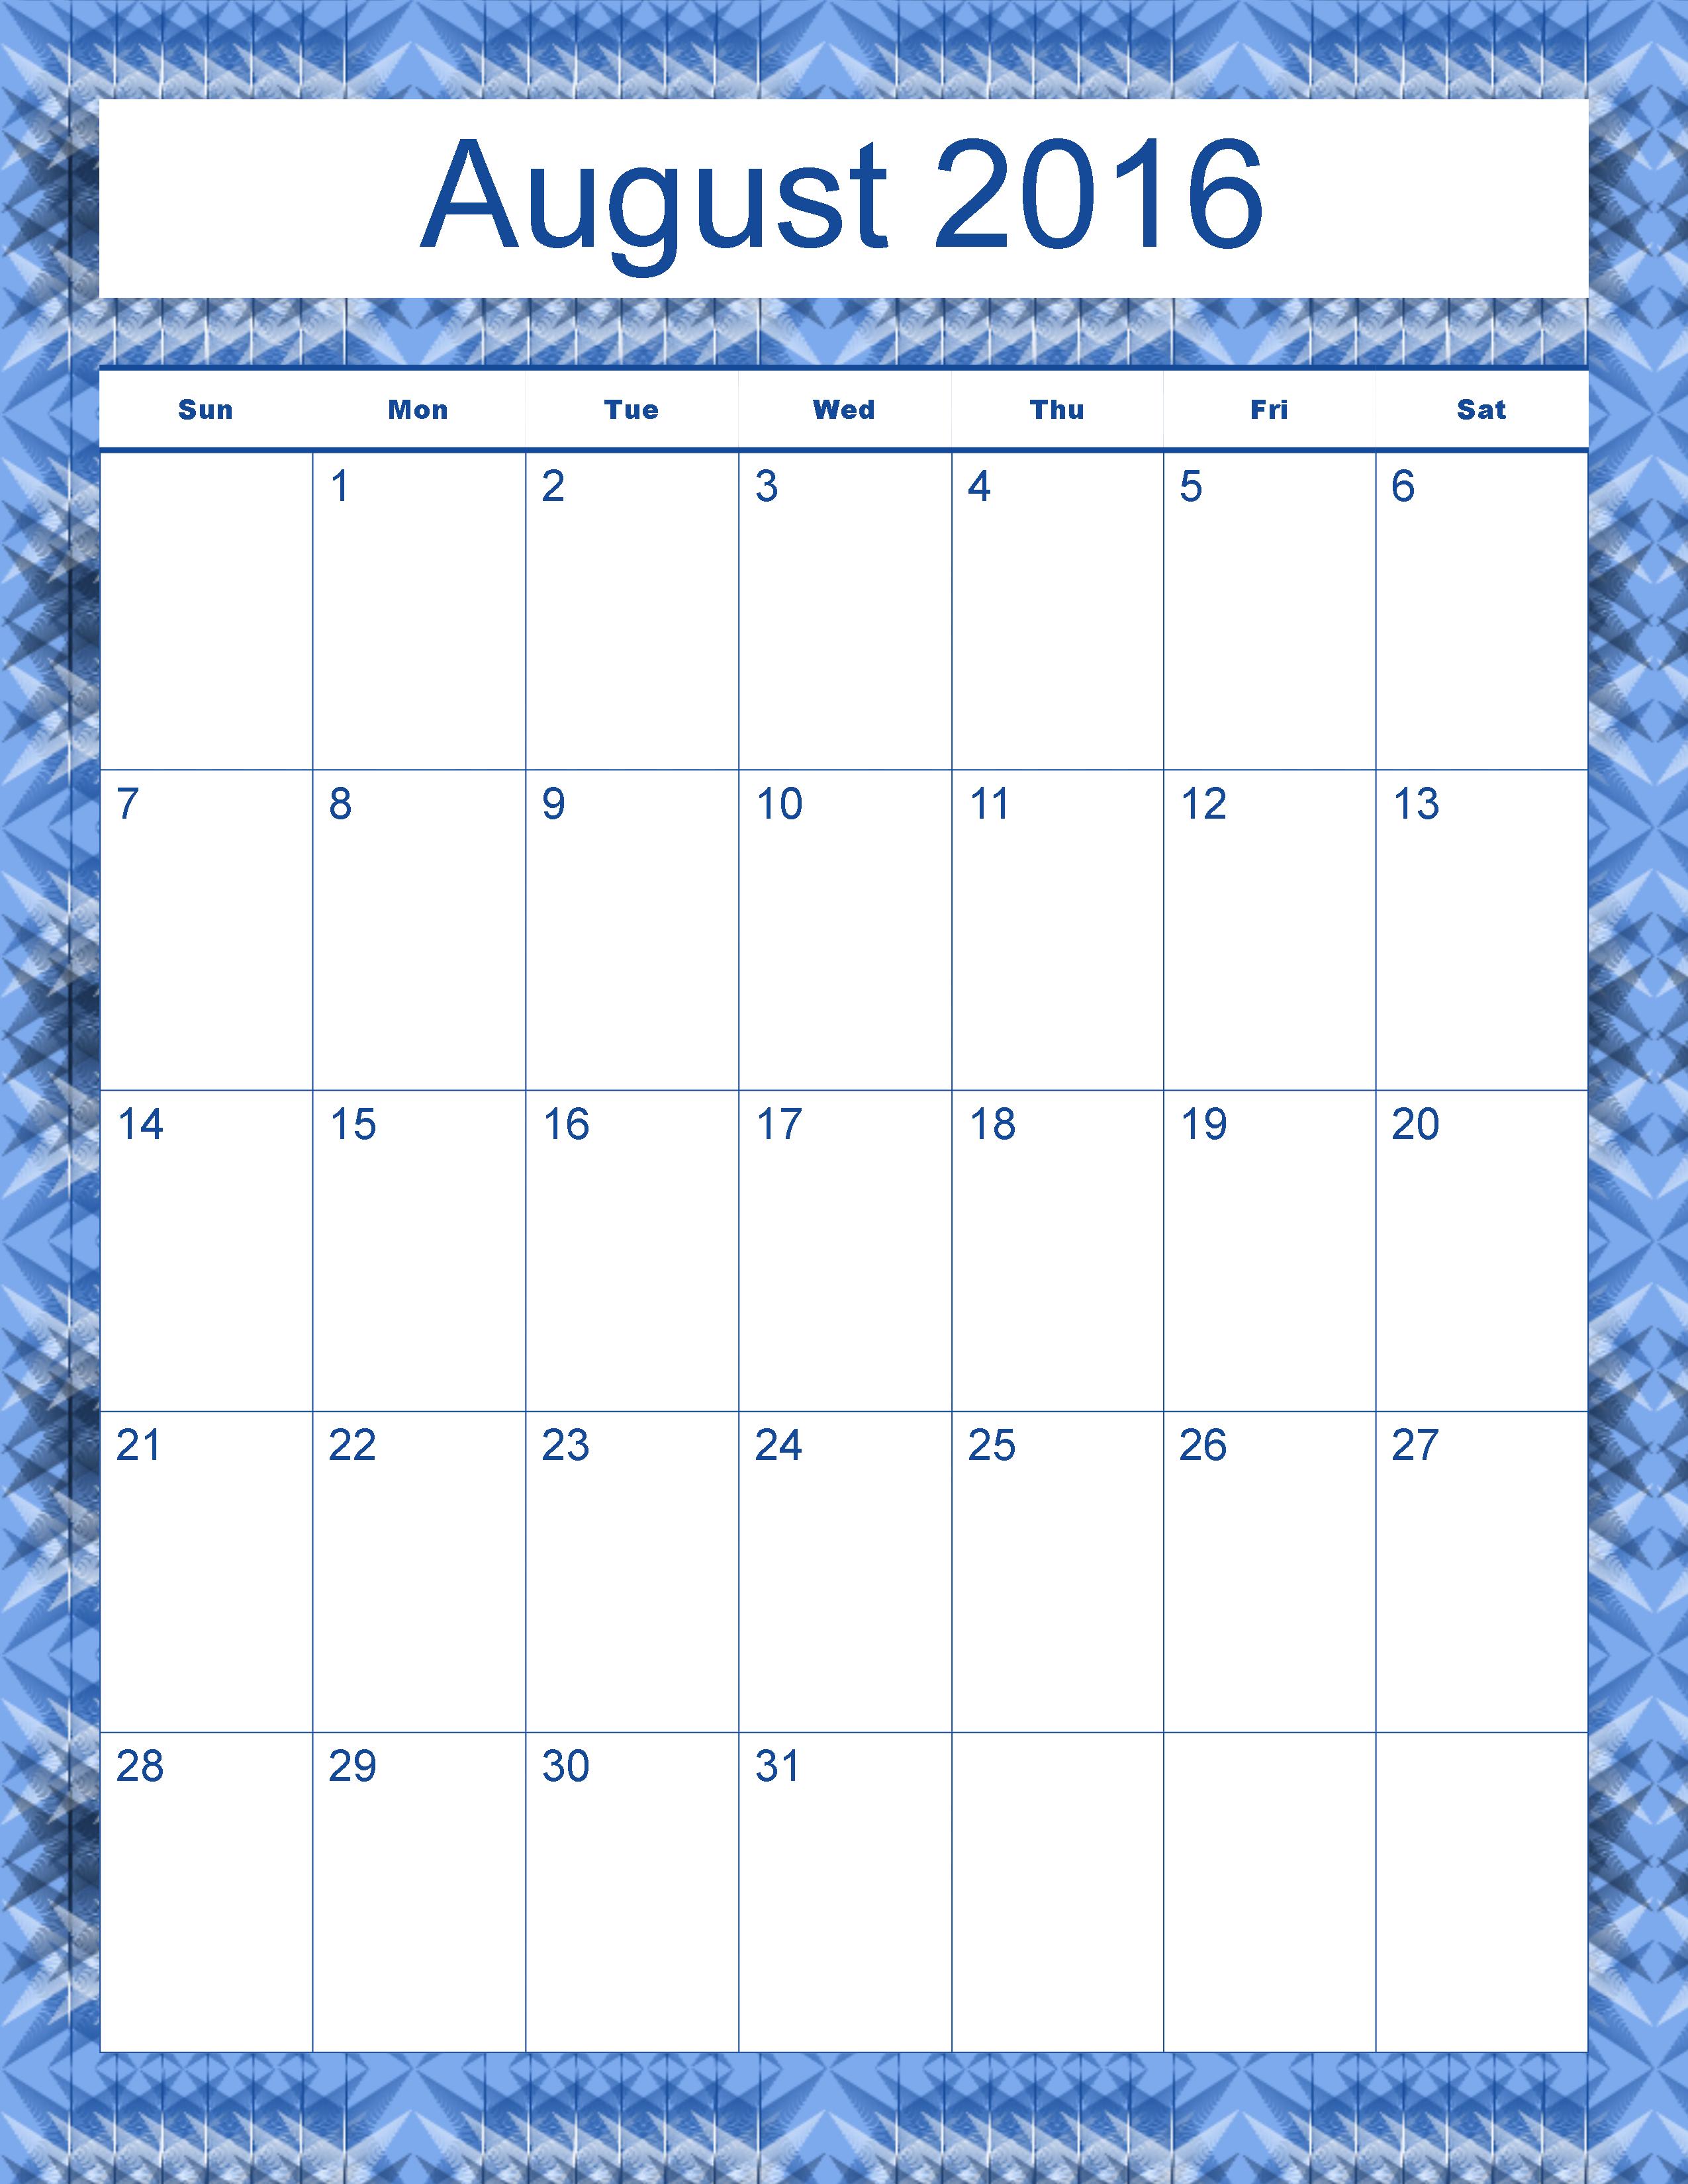 Free Photo Madison S Peak August 16 Calendar 16 August Calendar Free Download Jooinn